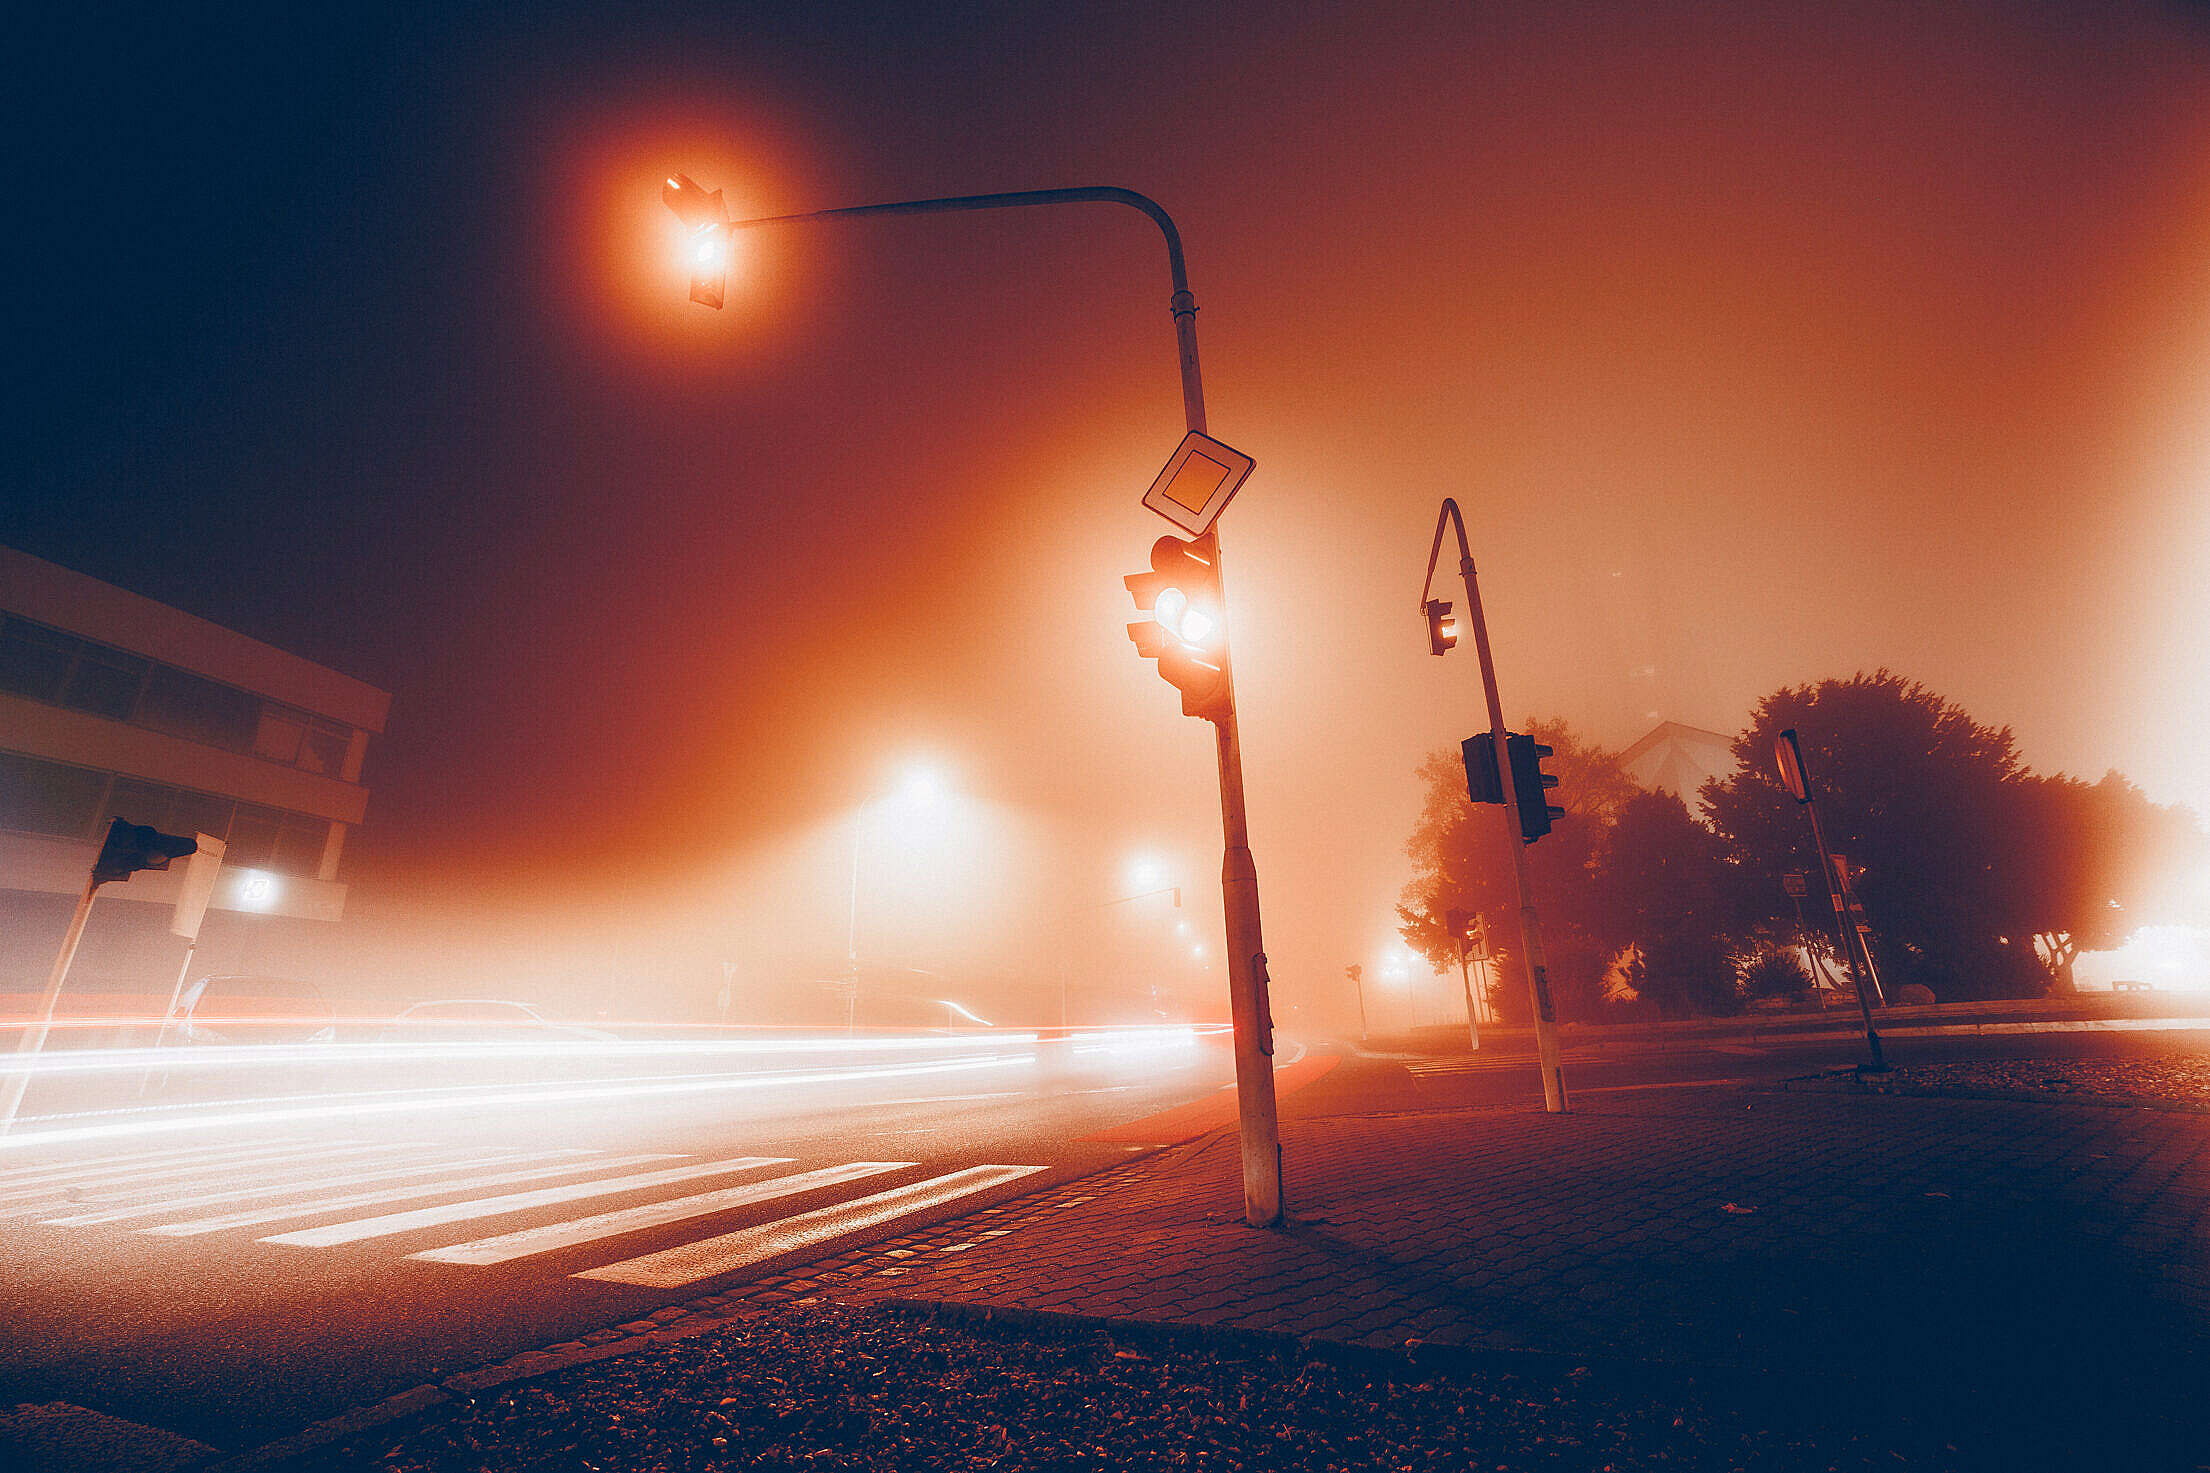 Car Lights & Crossroad Traffic Lights in The Fog Free Stock Photo